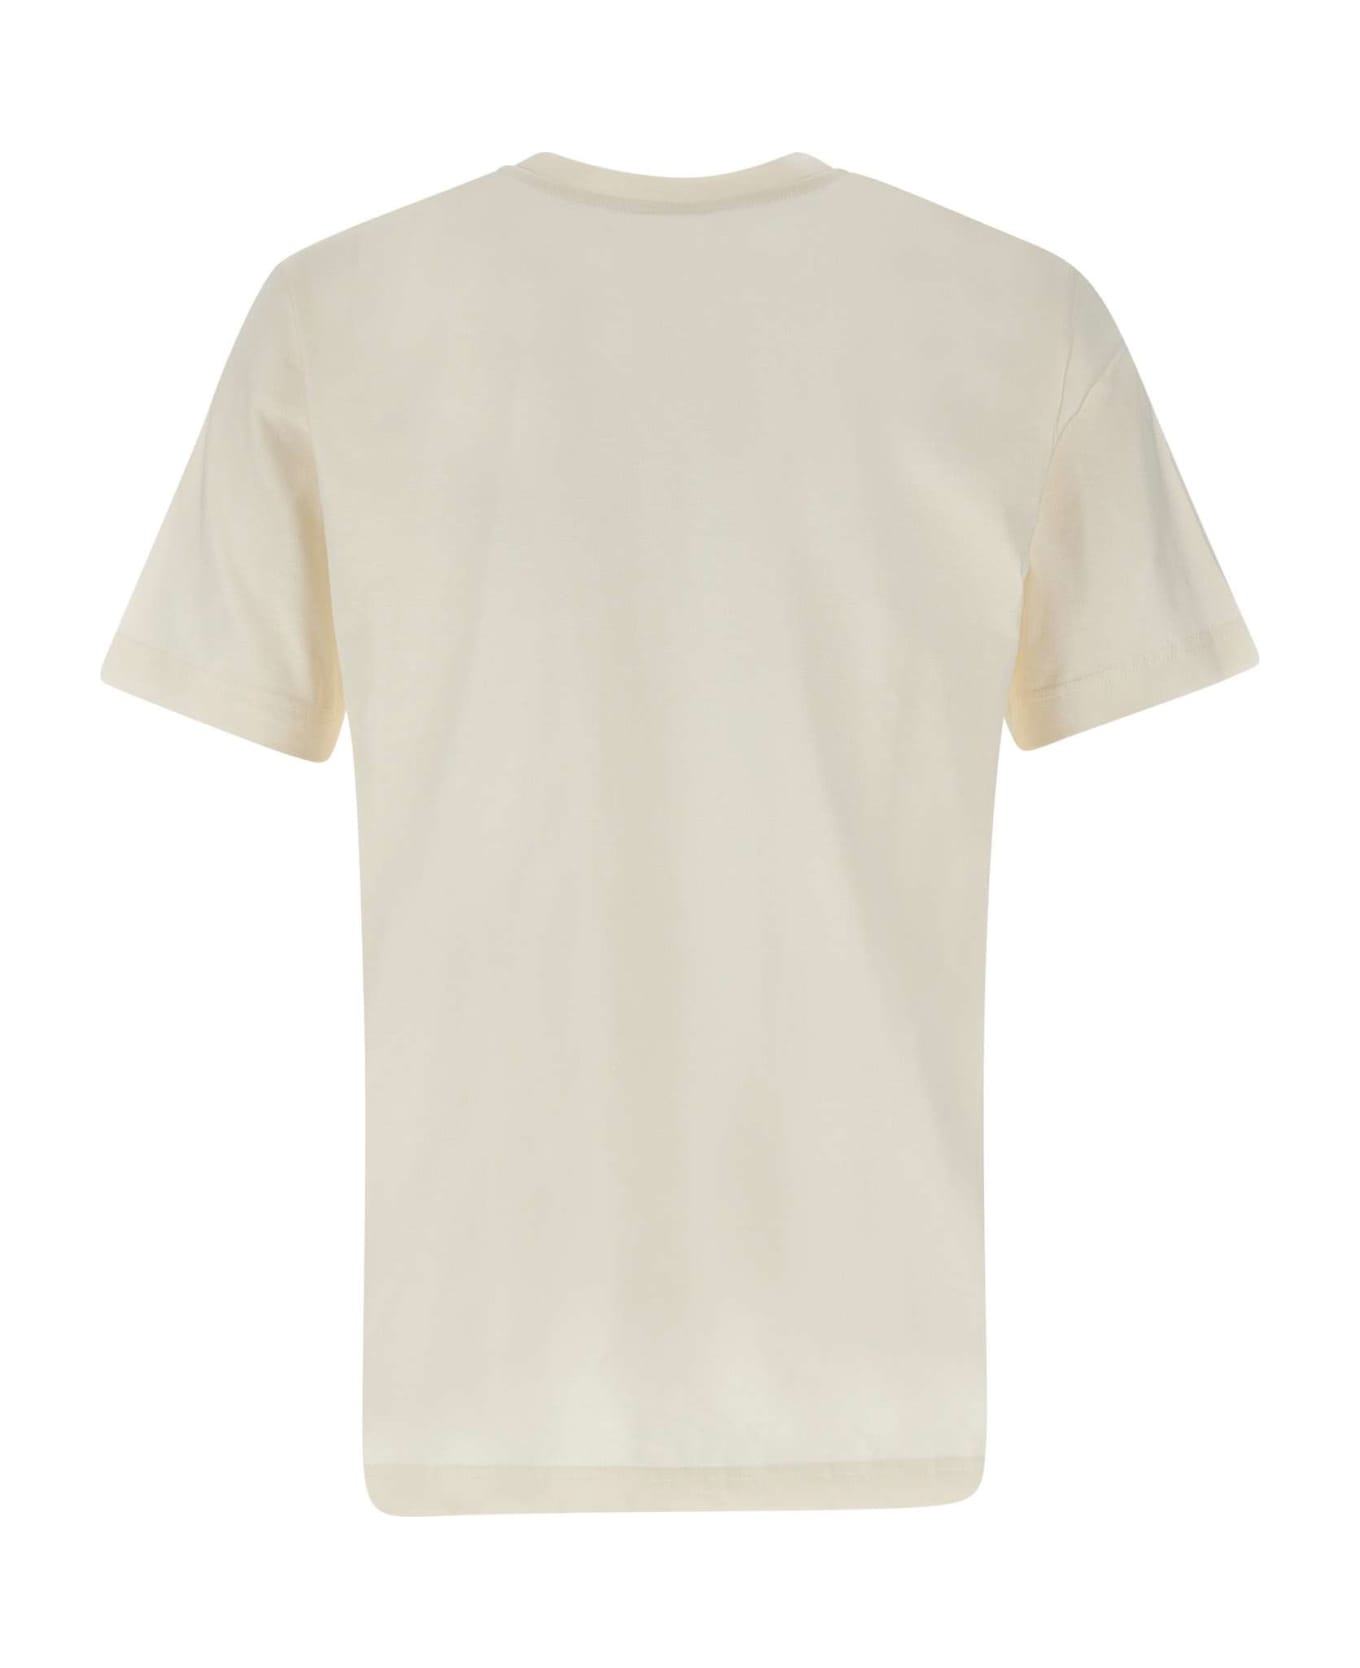 Iceberg Cotton T-shirt - IVORY シャツ